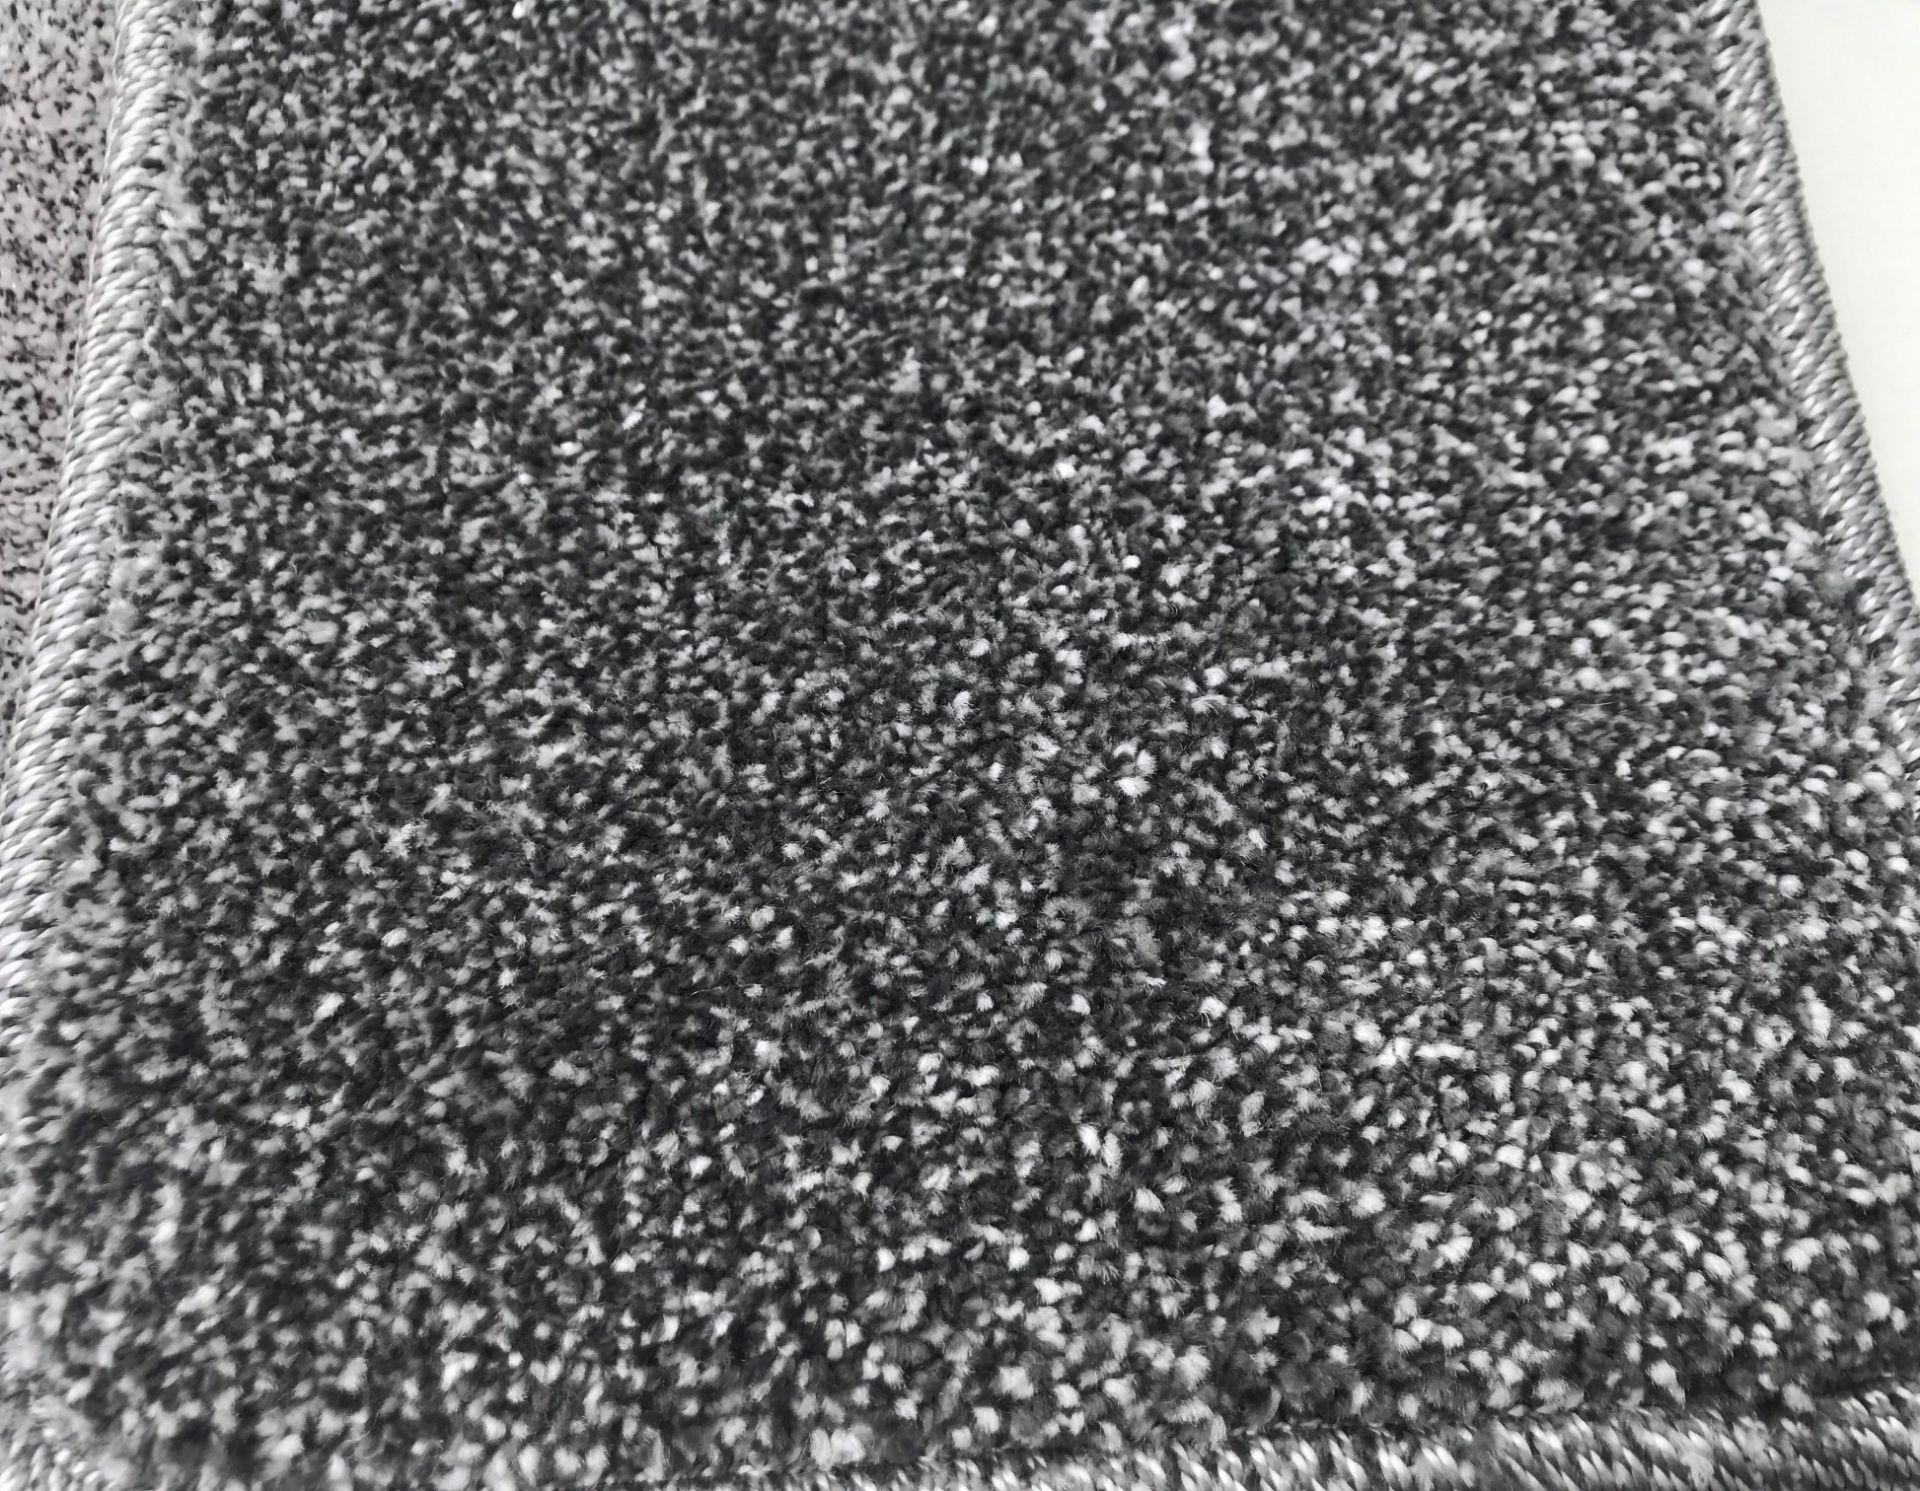 1 x Luxury 50Oz Twist Pile Carpet - Colour Platinum Grey - 18X4 Meter Roll - Rrp £36.99/Sqm - Ref: - Image 5 of 5